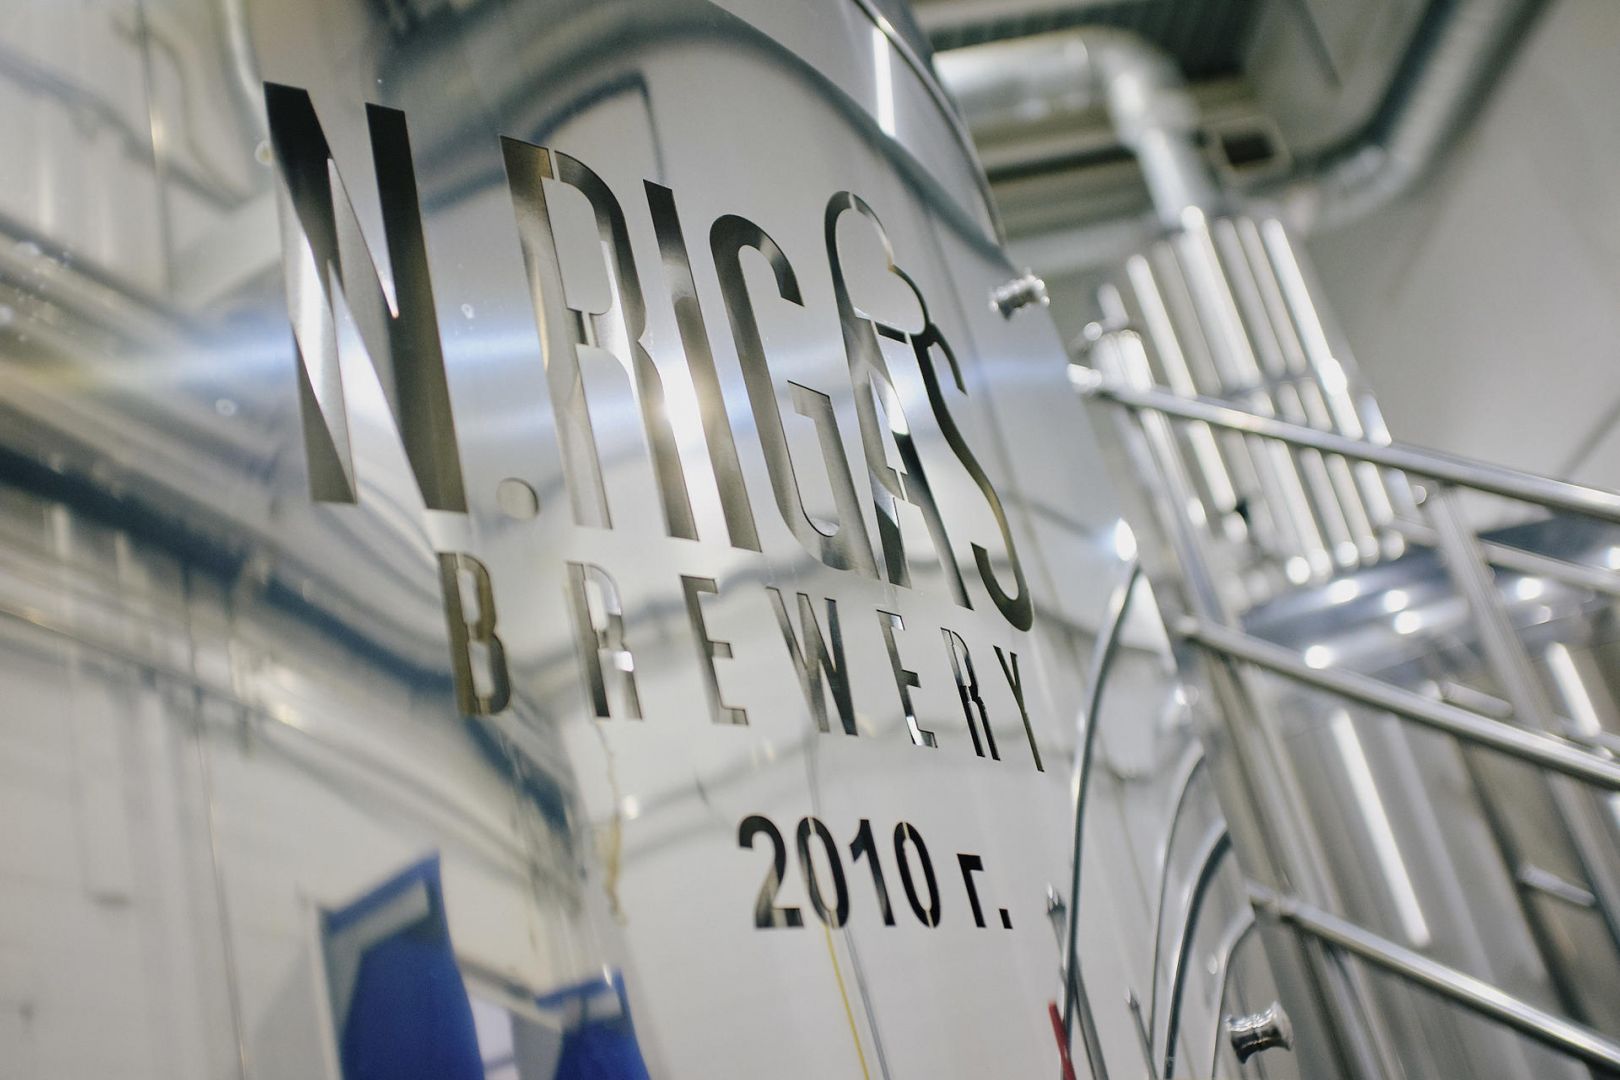 New Riga's Brewery